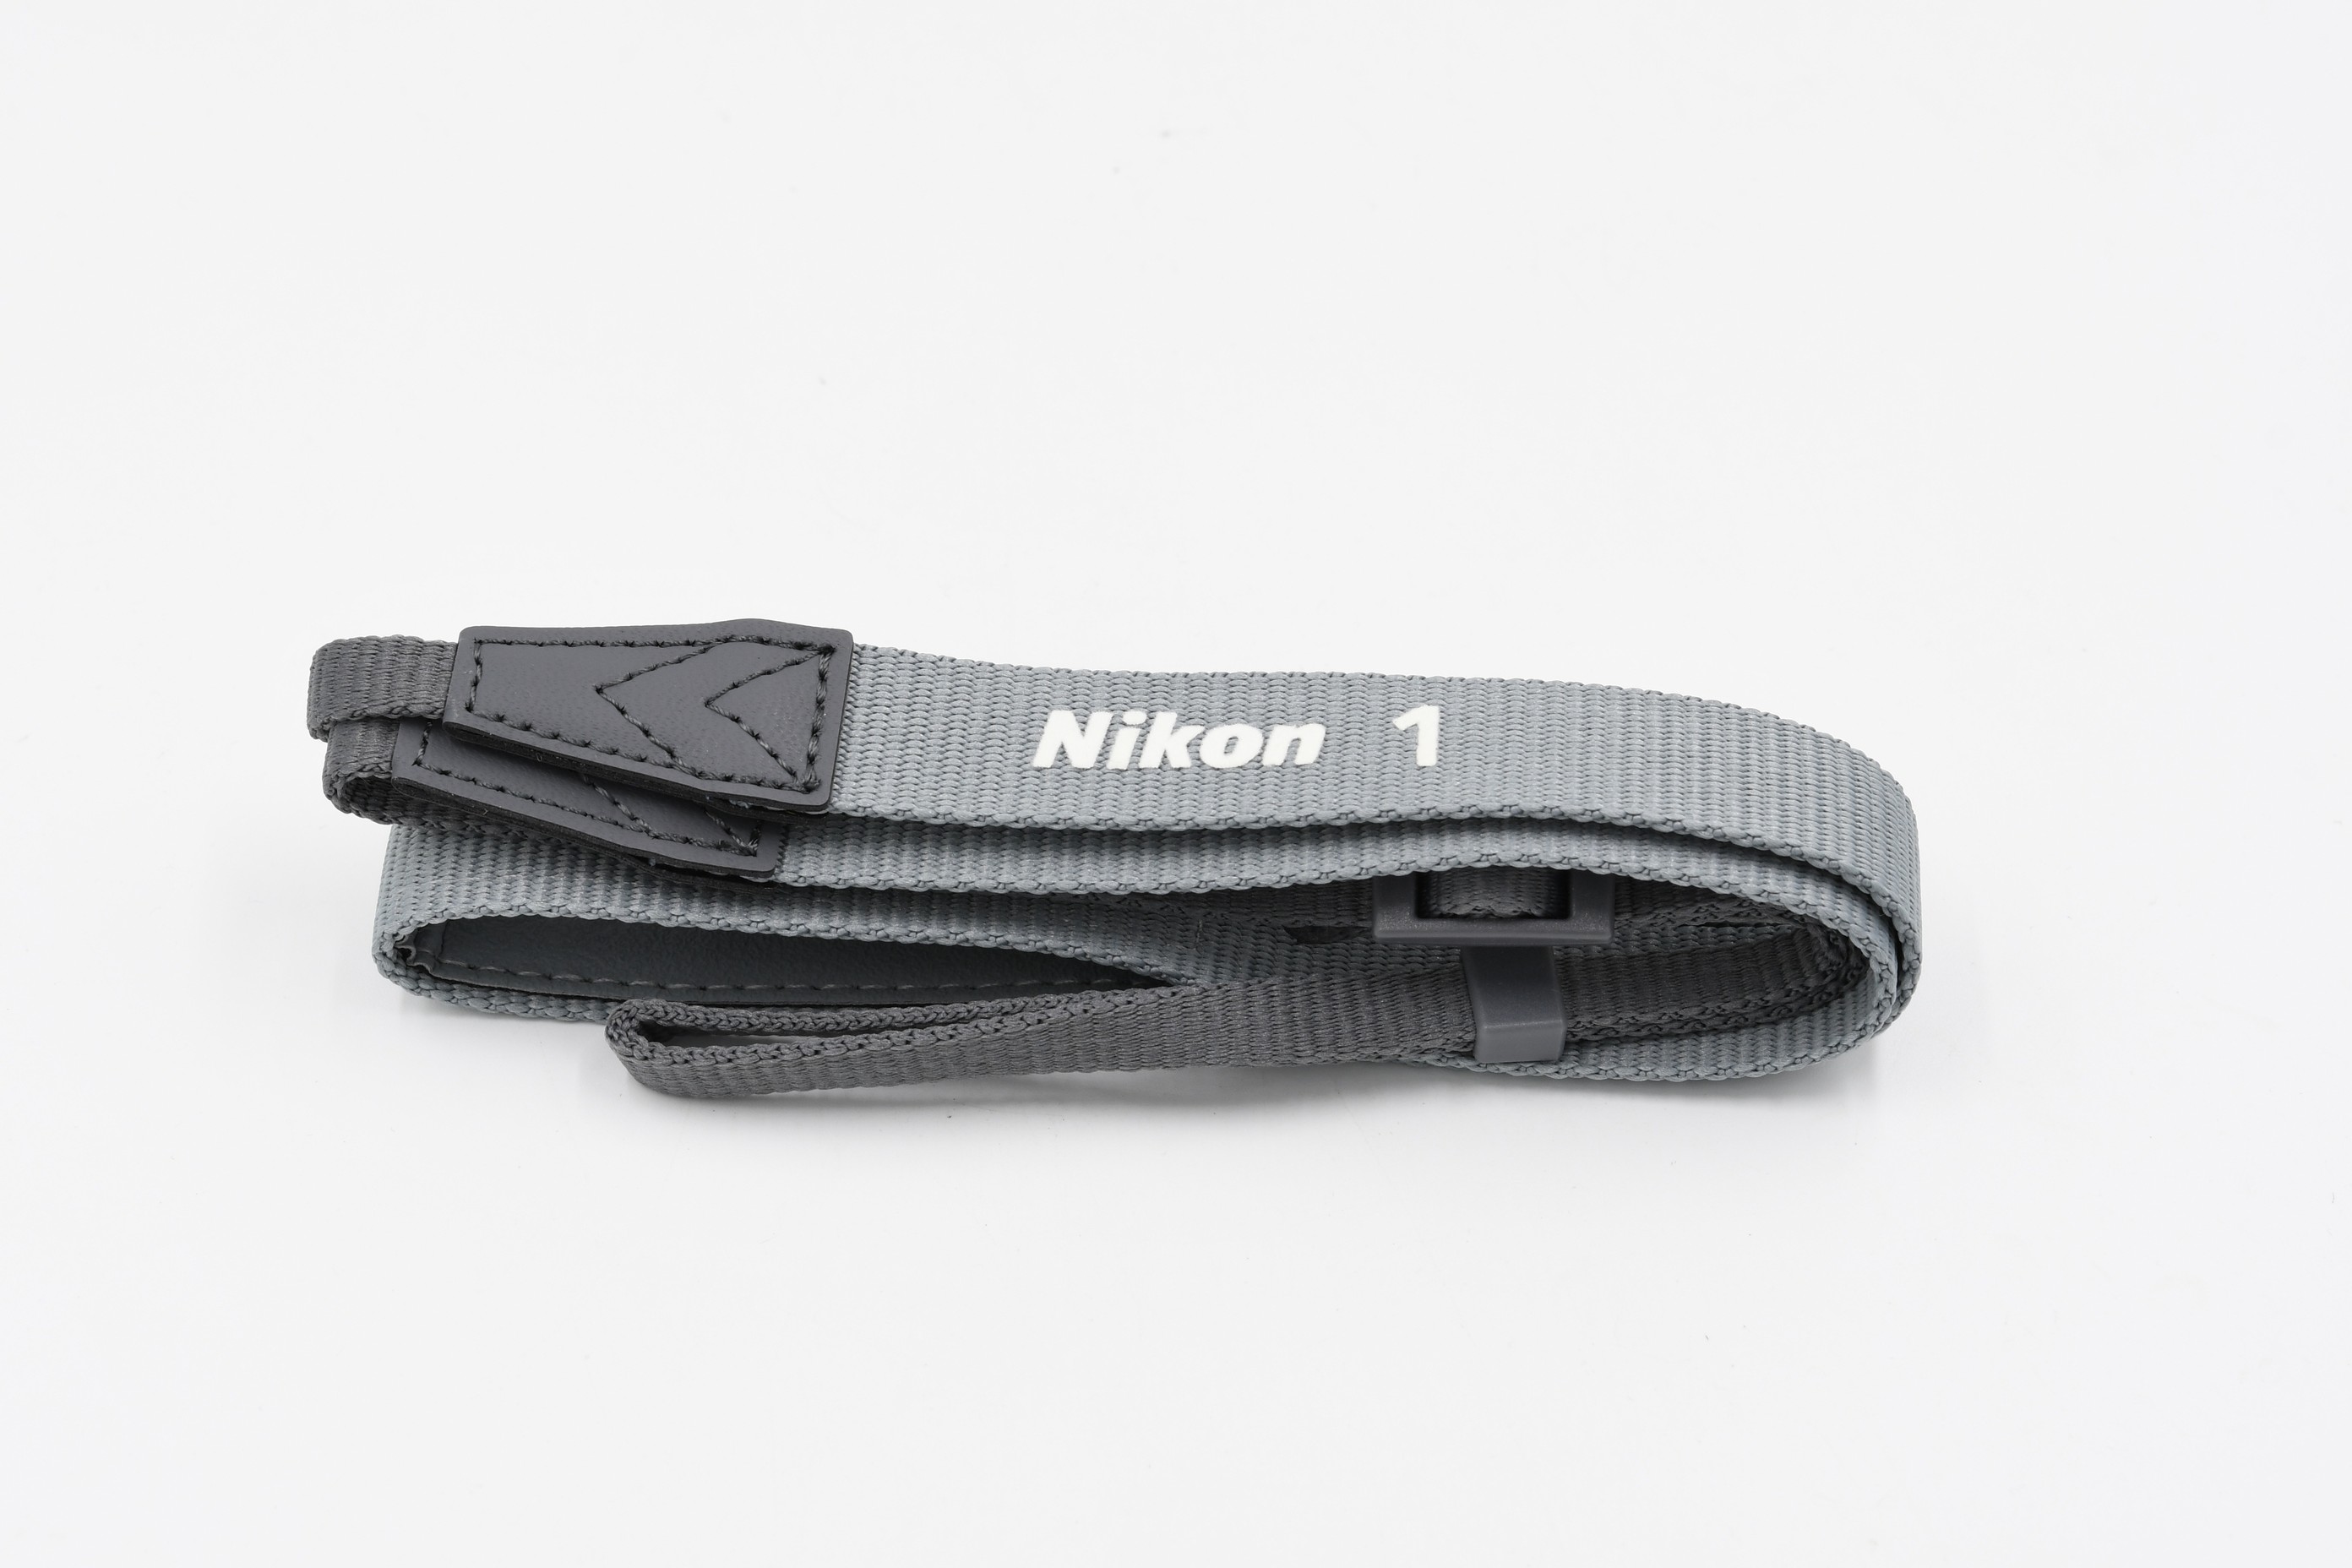 Ремень Nikon серый, узкий (20мм) (состояние NEW)